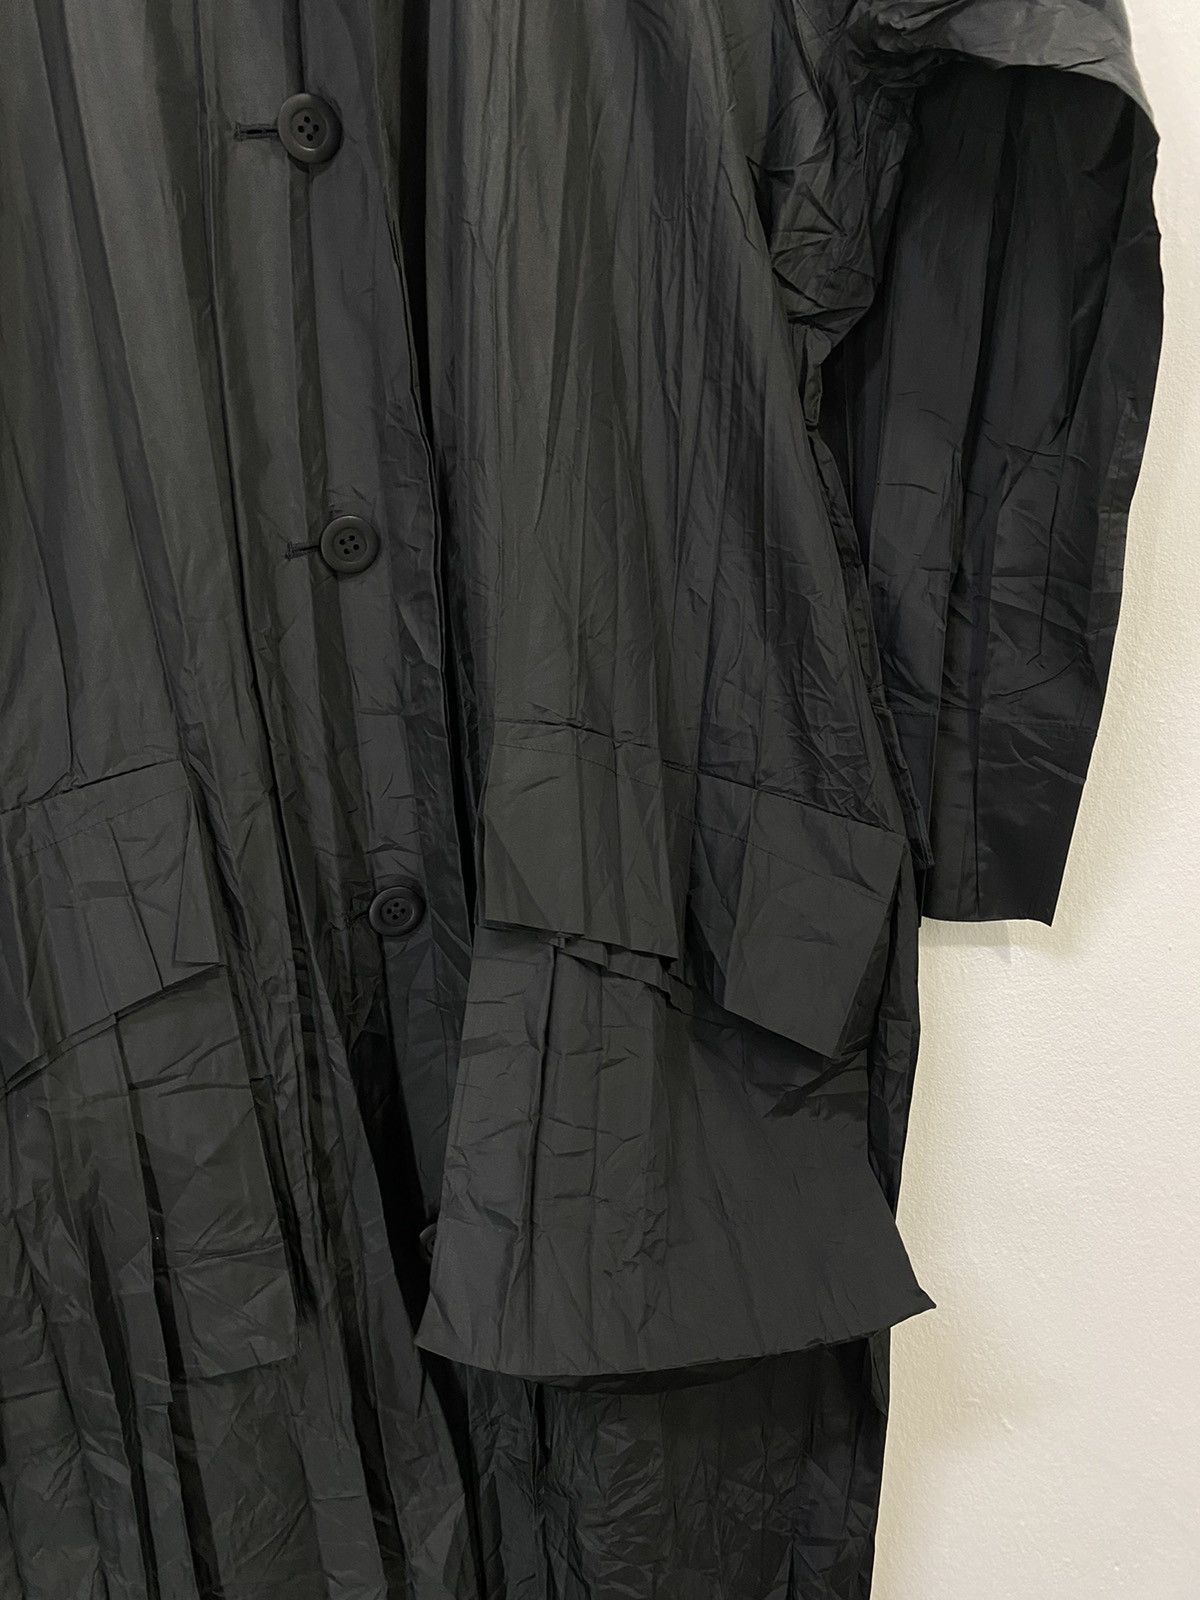 Rare Issey Miyake Wrinkle Pleated Long Jacket Design Rare - 6